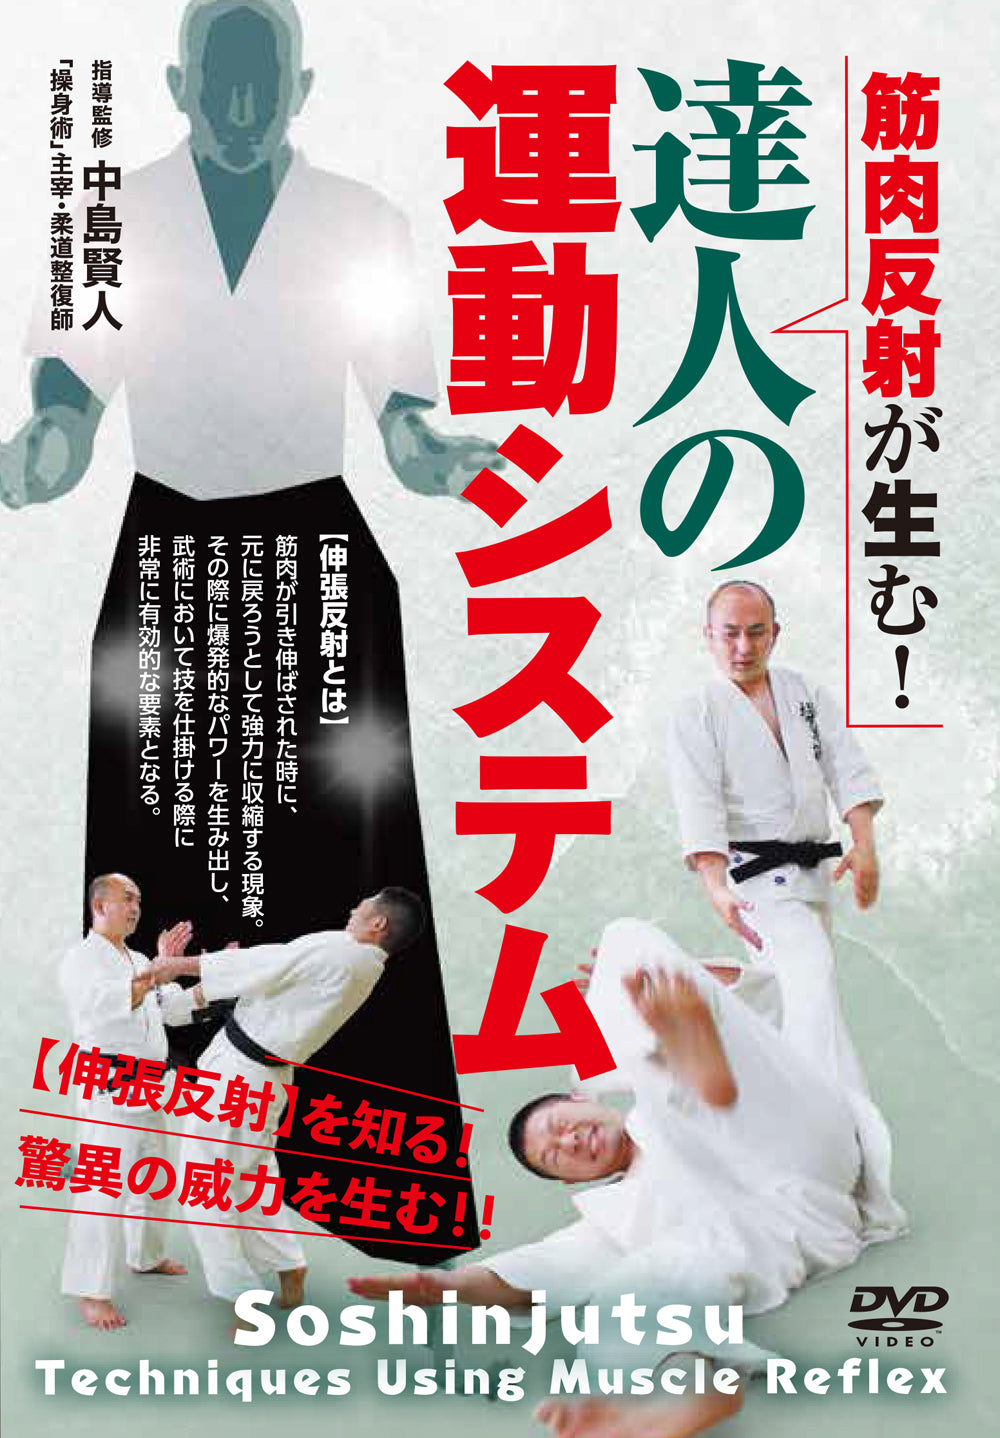 Soshinjutsu: Techniques Using Muscle Reflex DVD by Kento Nakajima